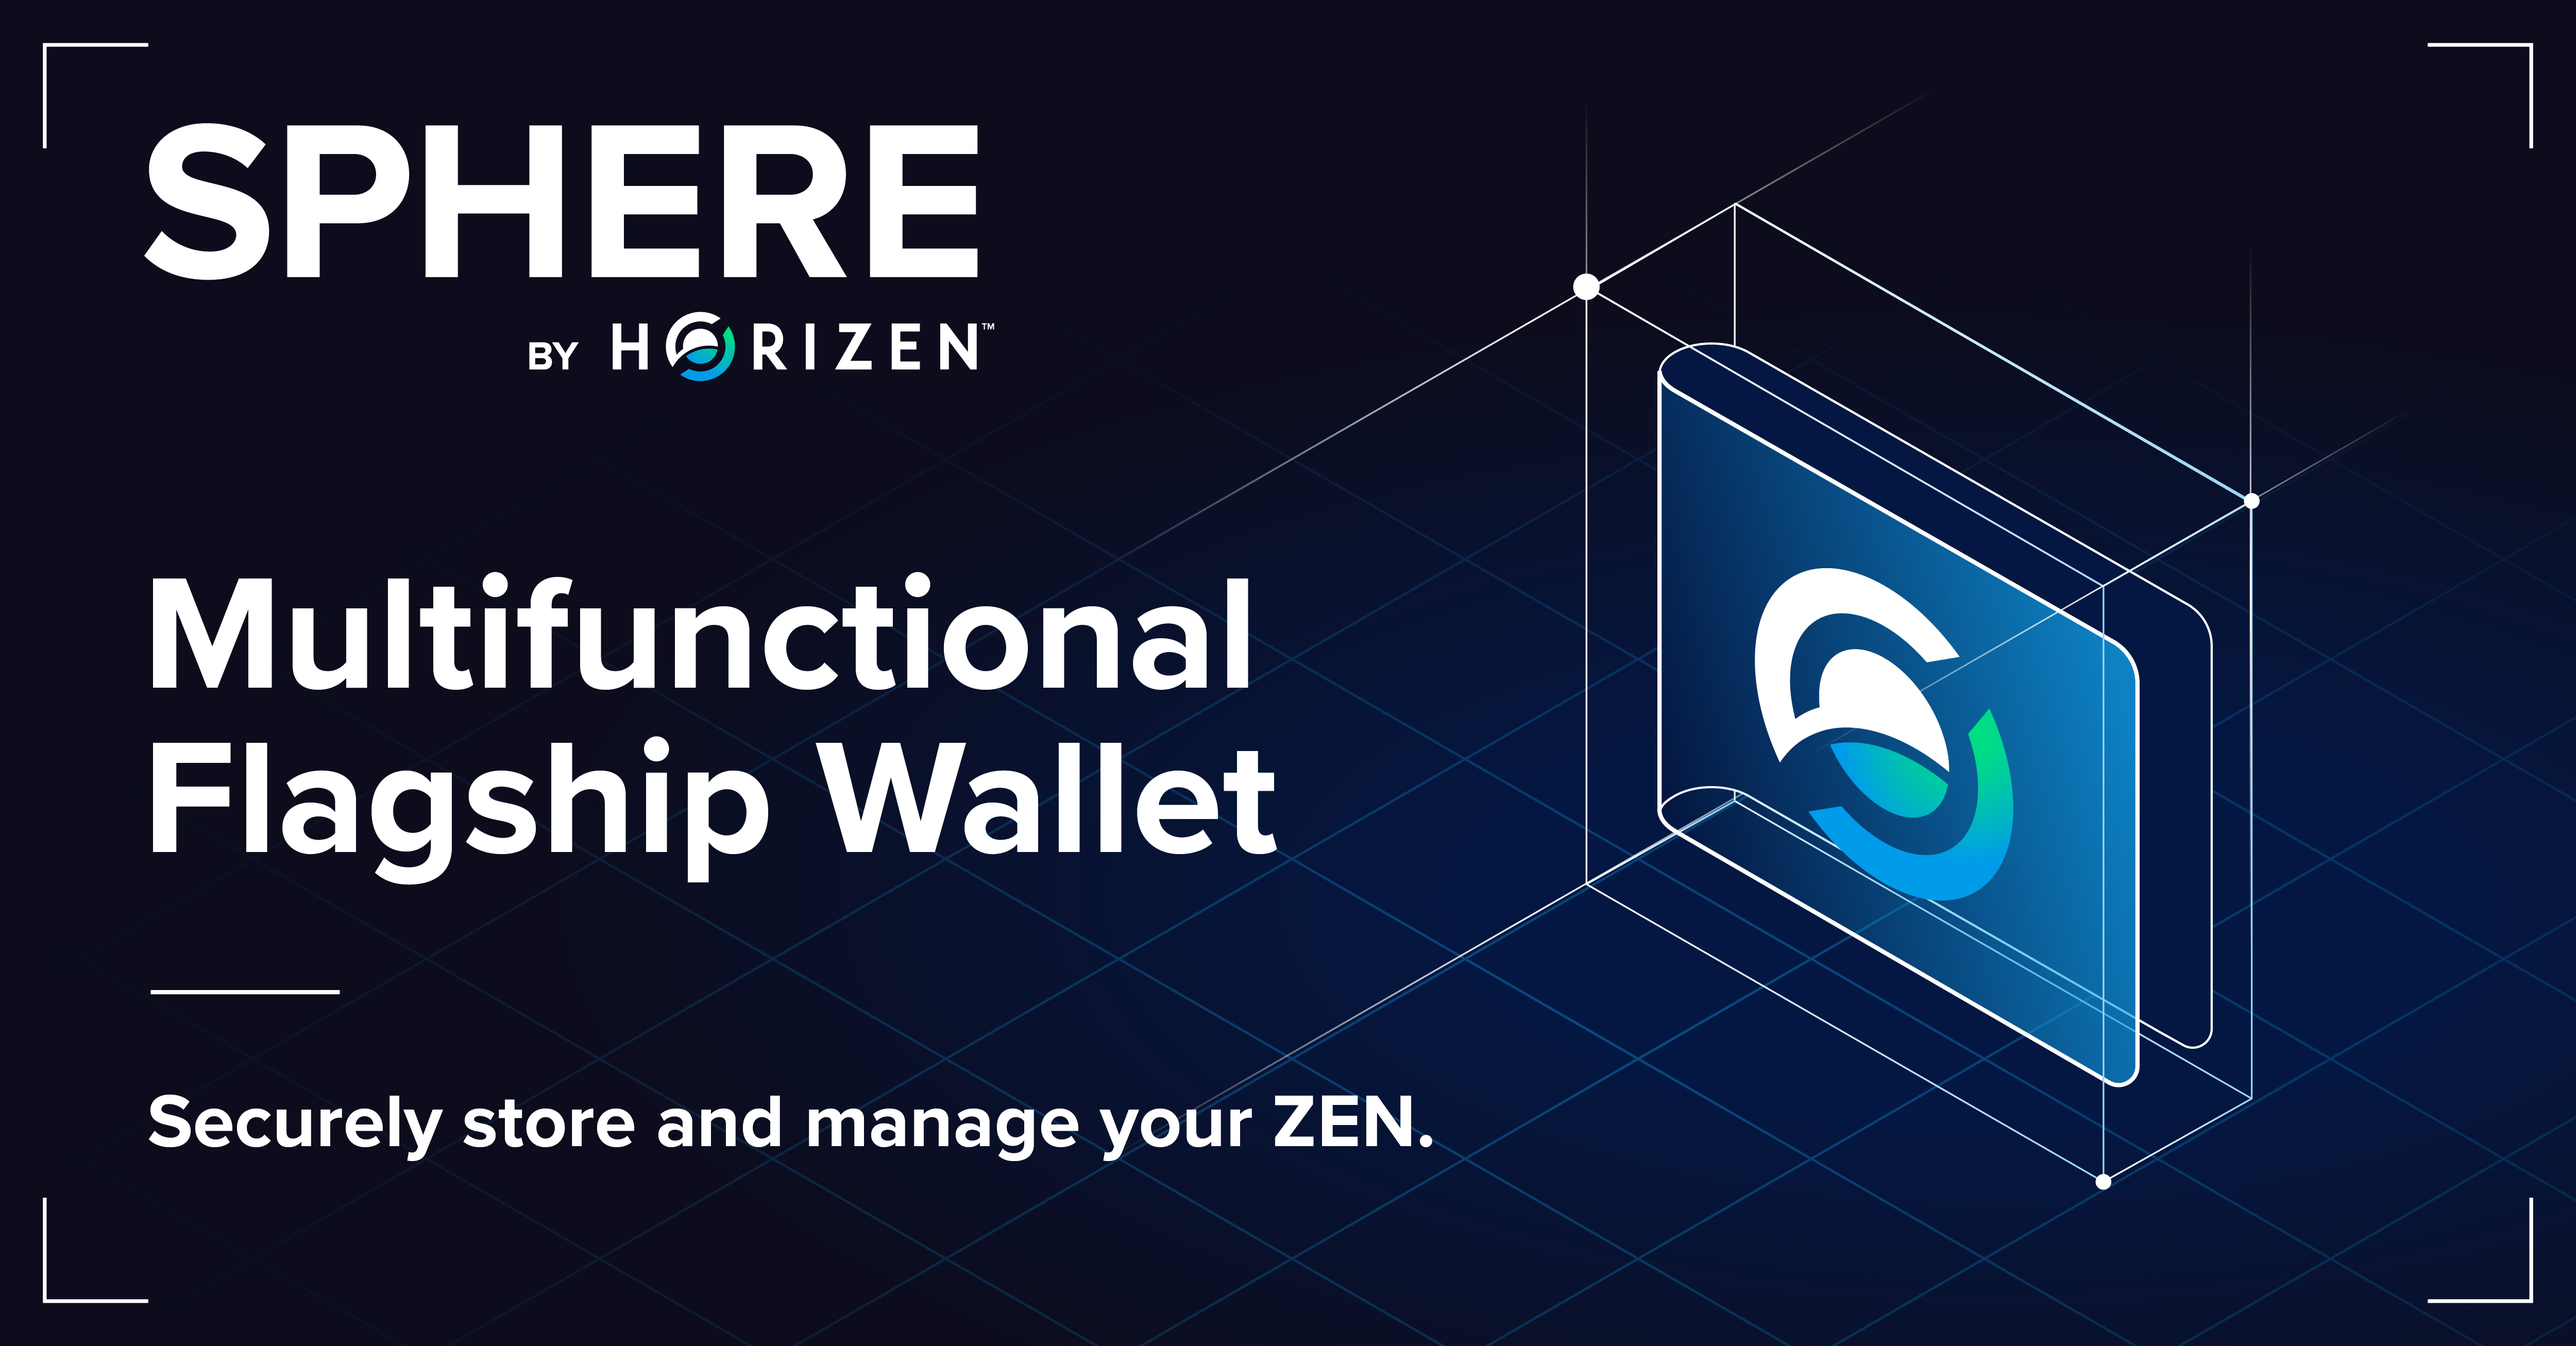 Sphere by Horizen - A Multifunctional Wallet